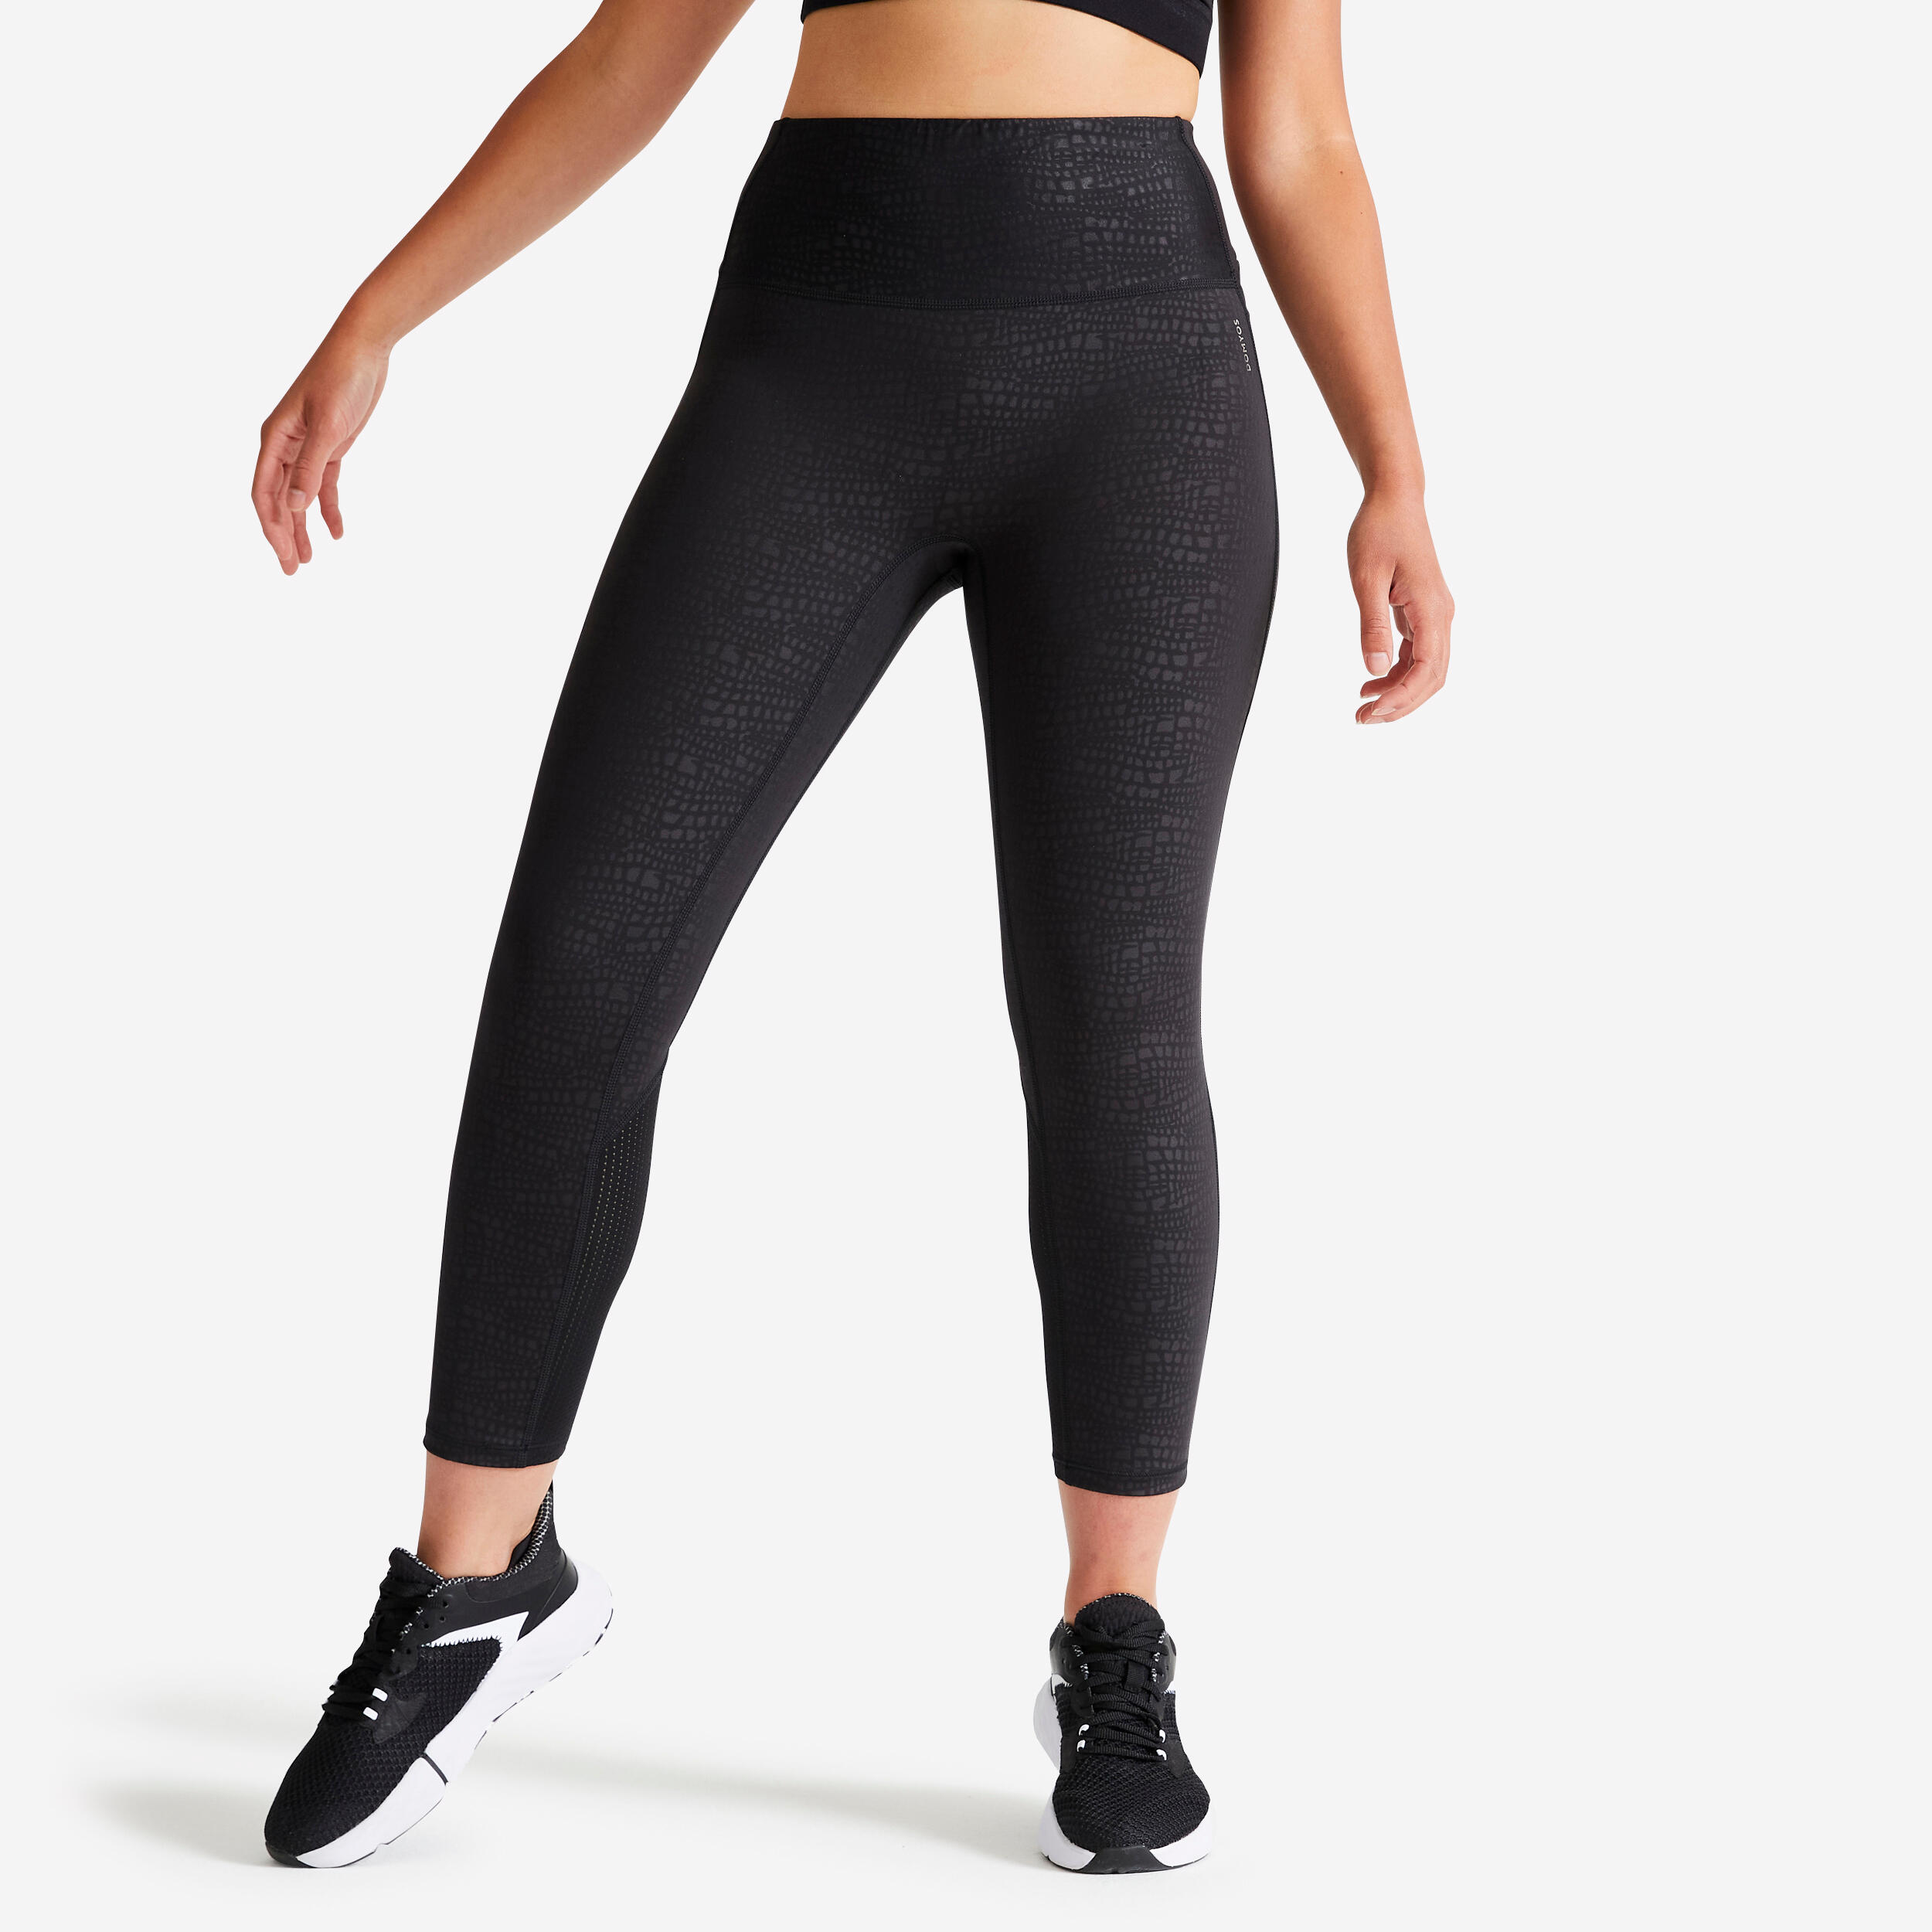 Danskin Women's Athleisure Sleek Fit Crop Yoga Pants Black- XL